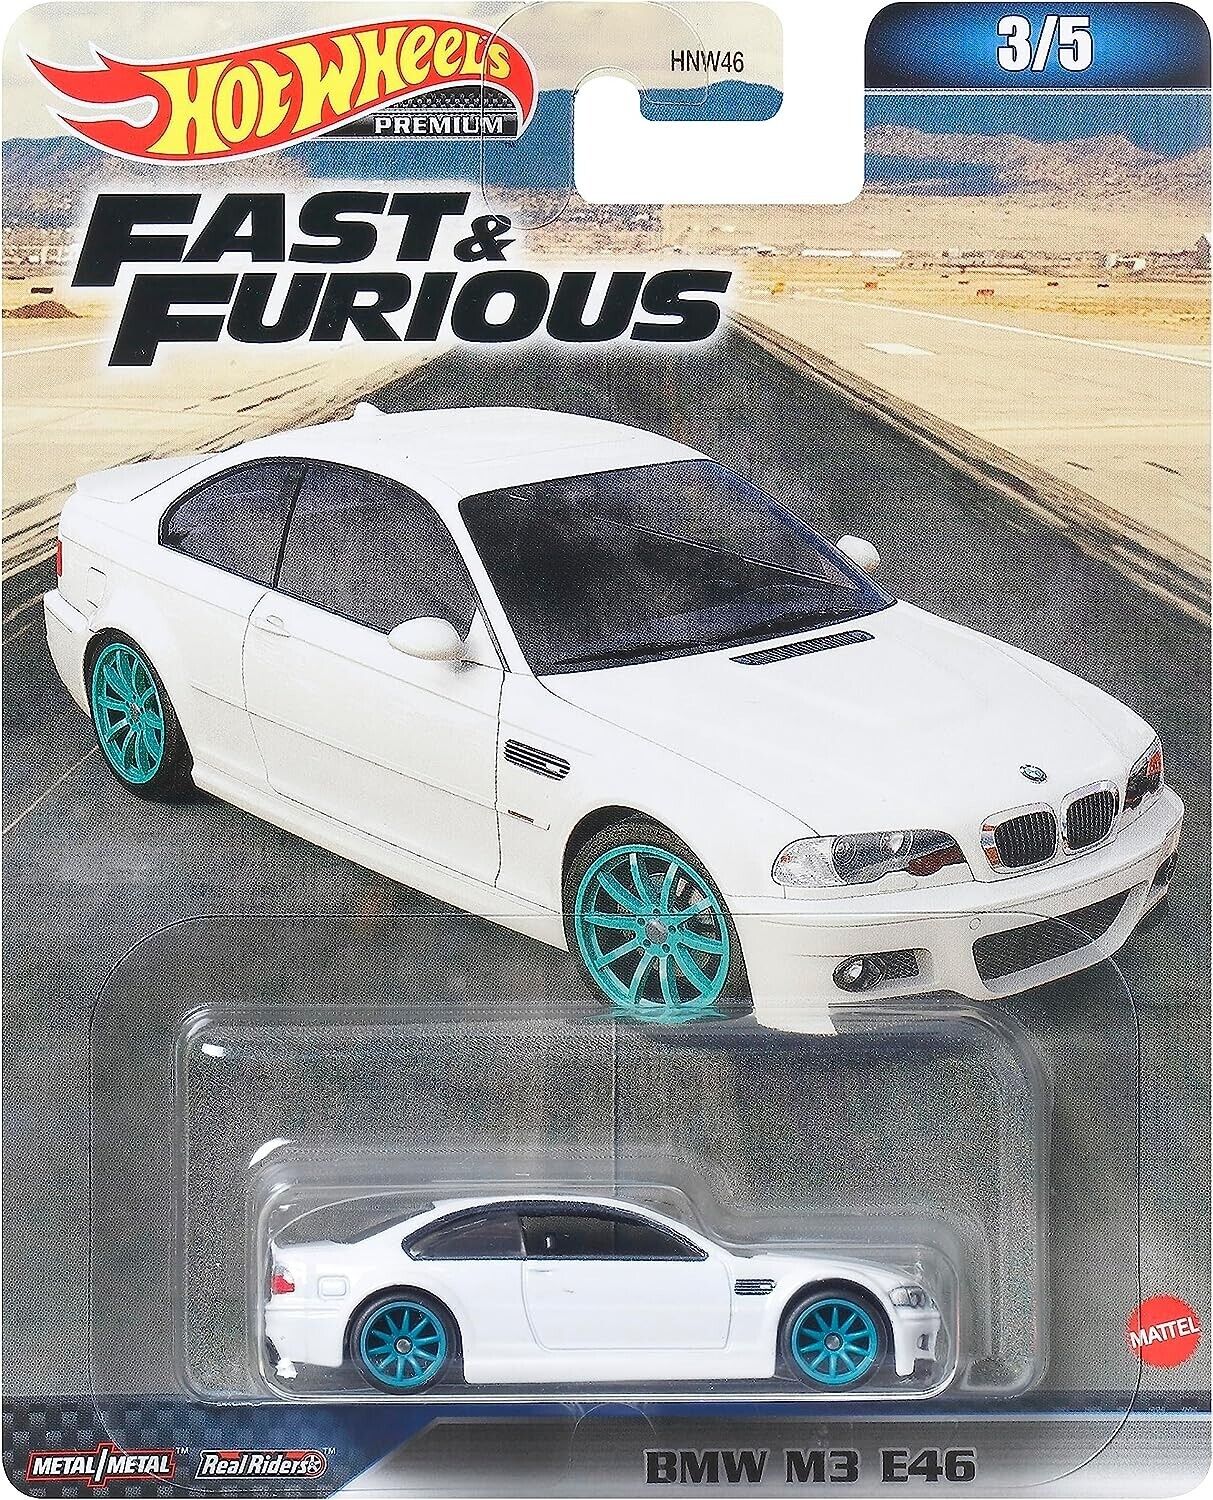 Hot Wheels Fast & Furious Car Set –